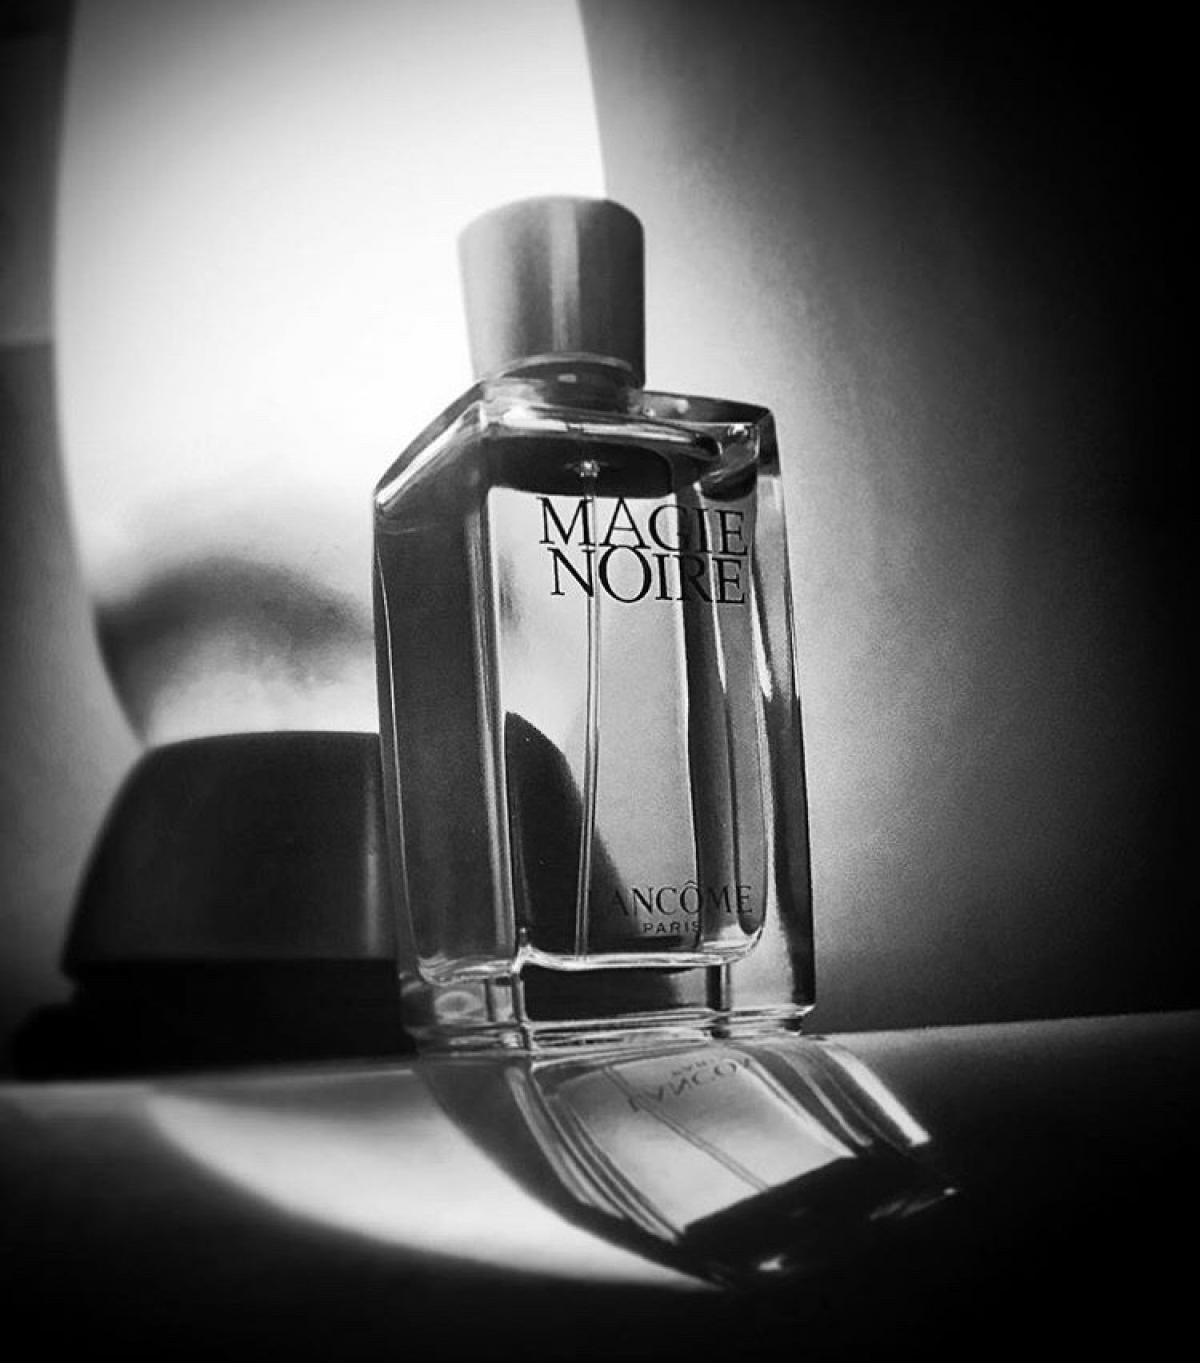 Magie Noire Lancome perfume - a fragrance for women 1978